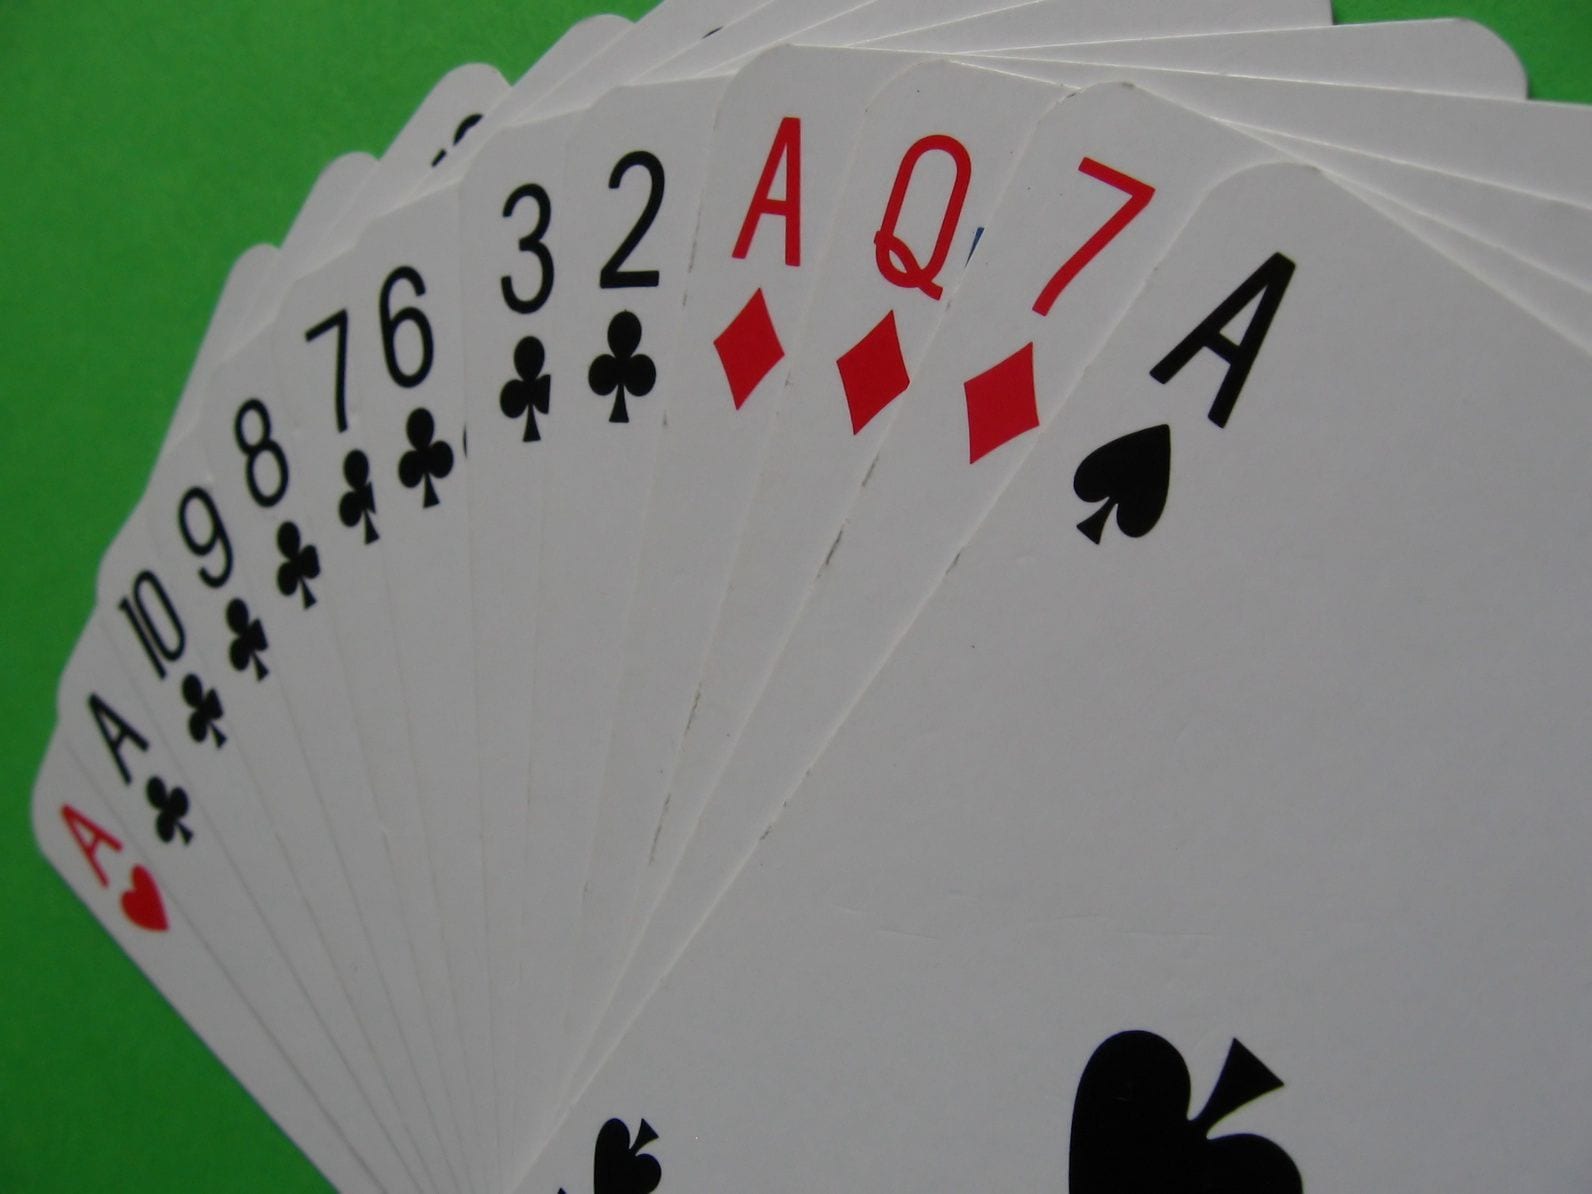 three card poker rivers casino